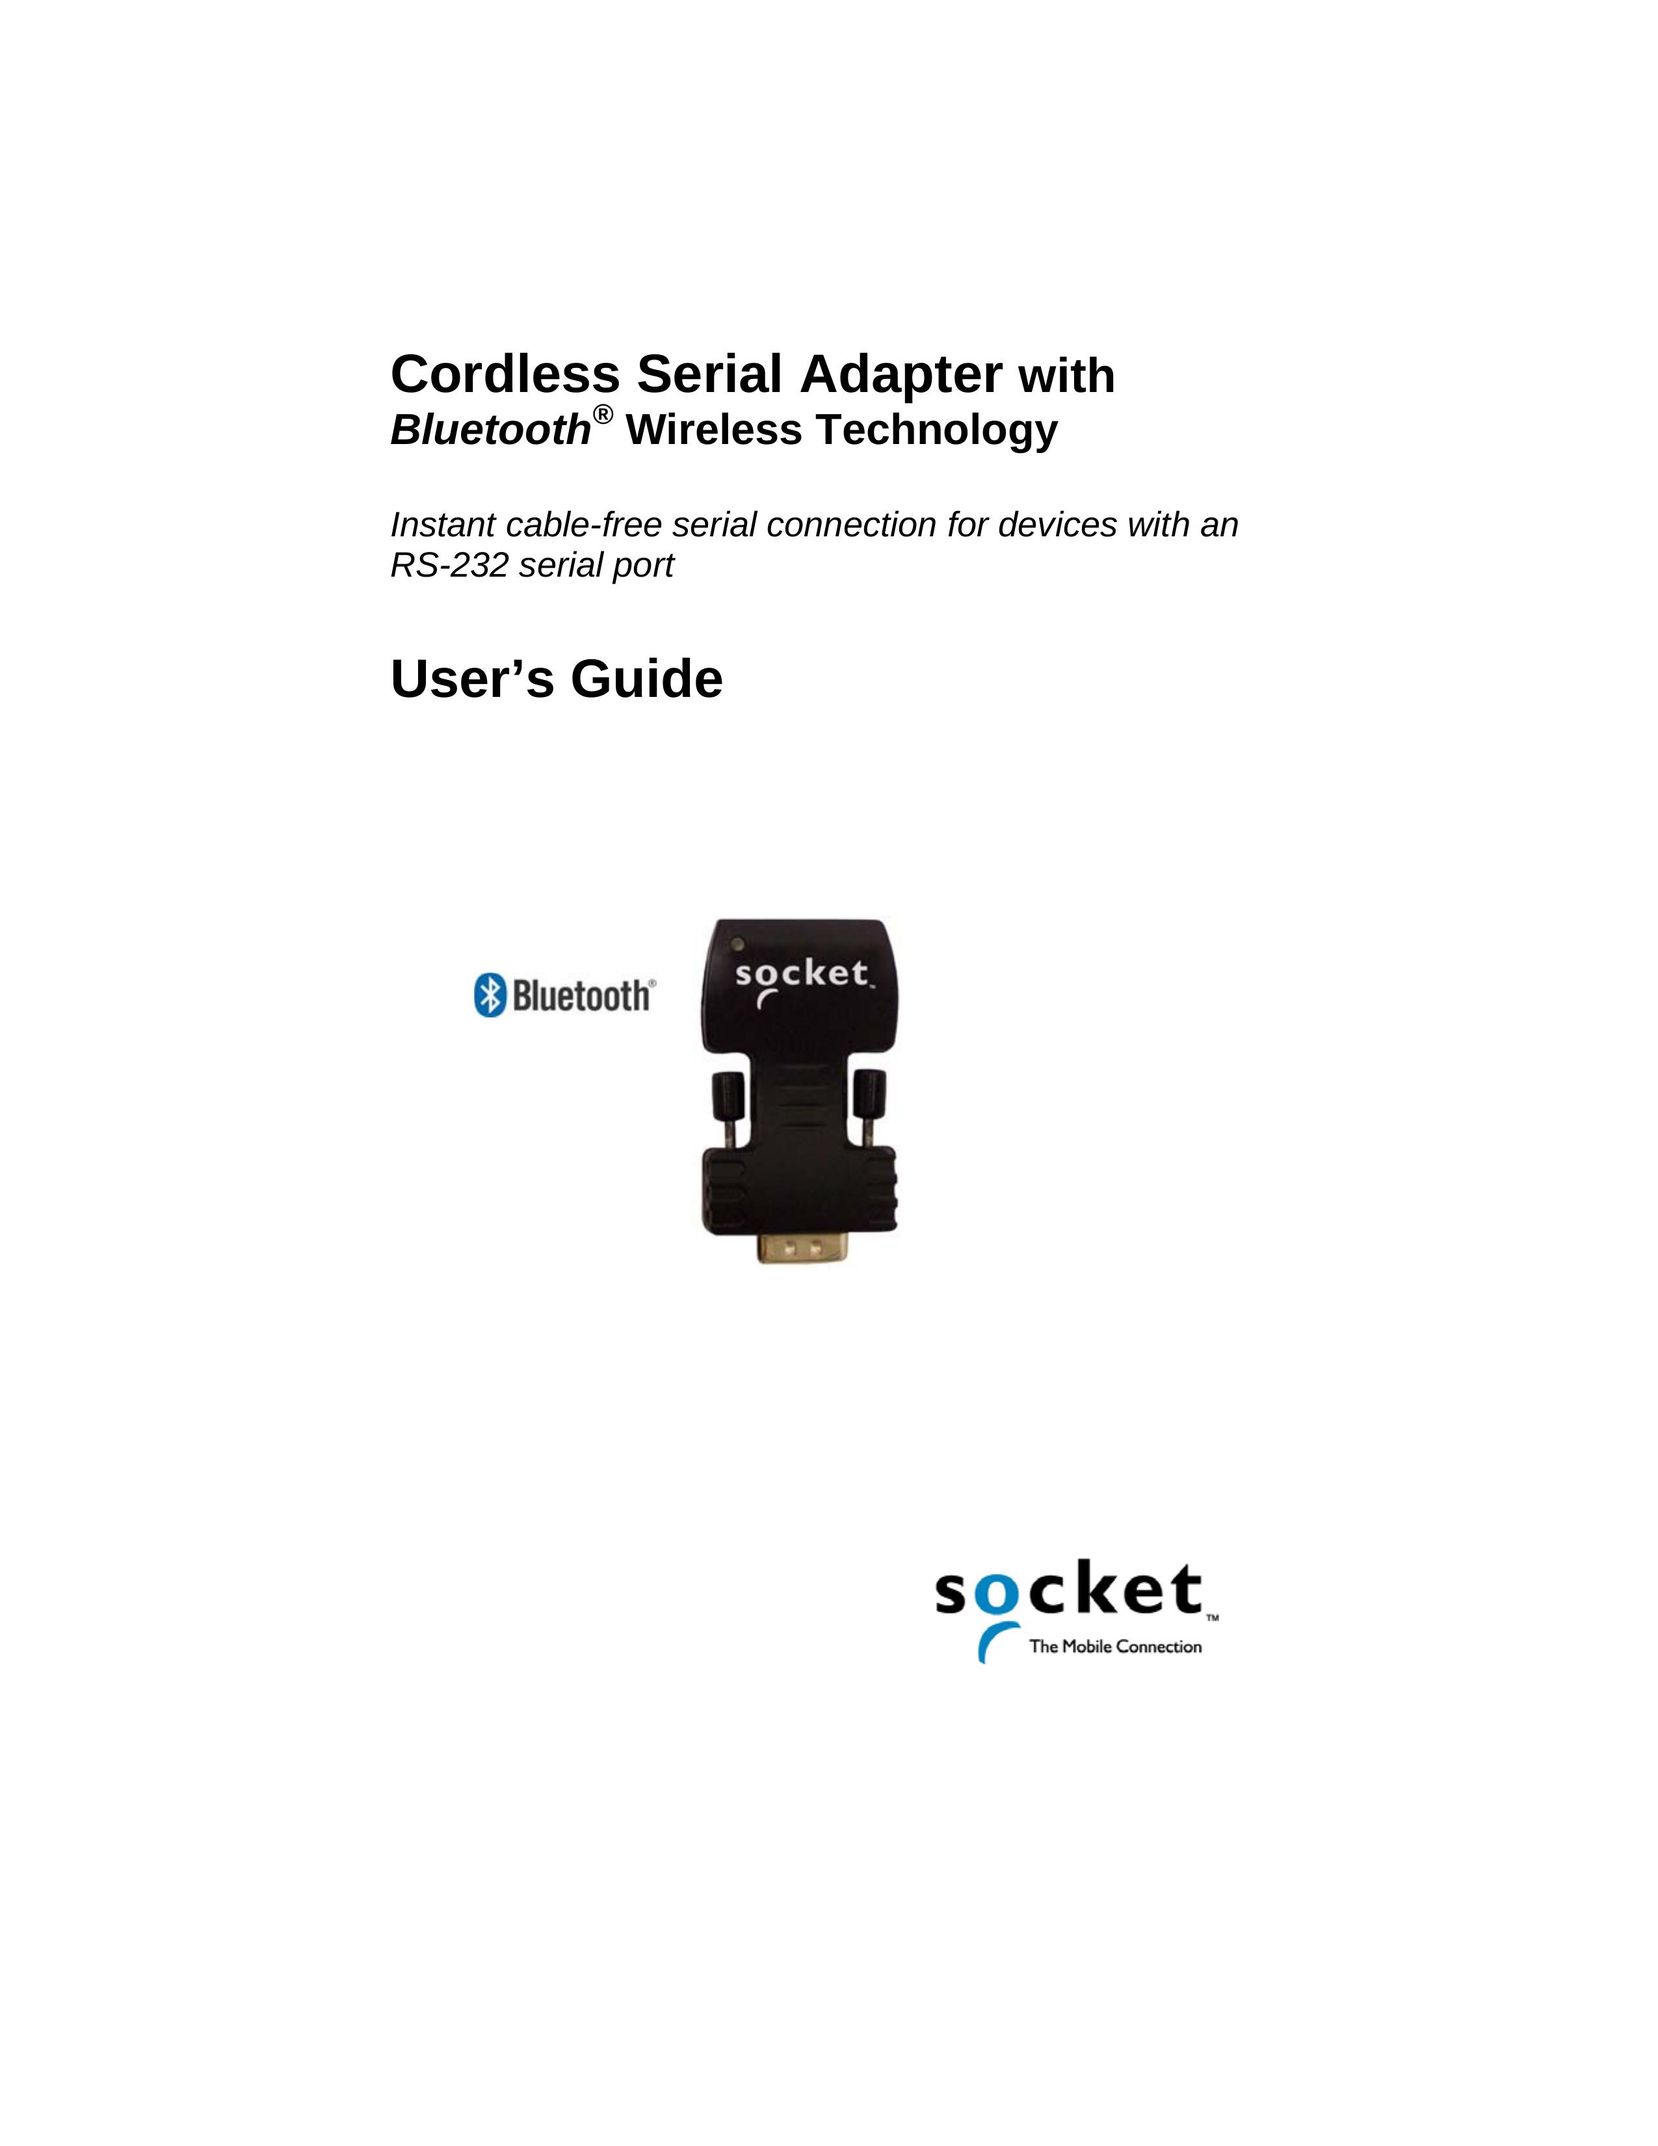 Socket Mobile Cordless Serial Adapter Network Card User Manual